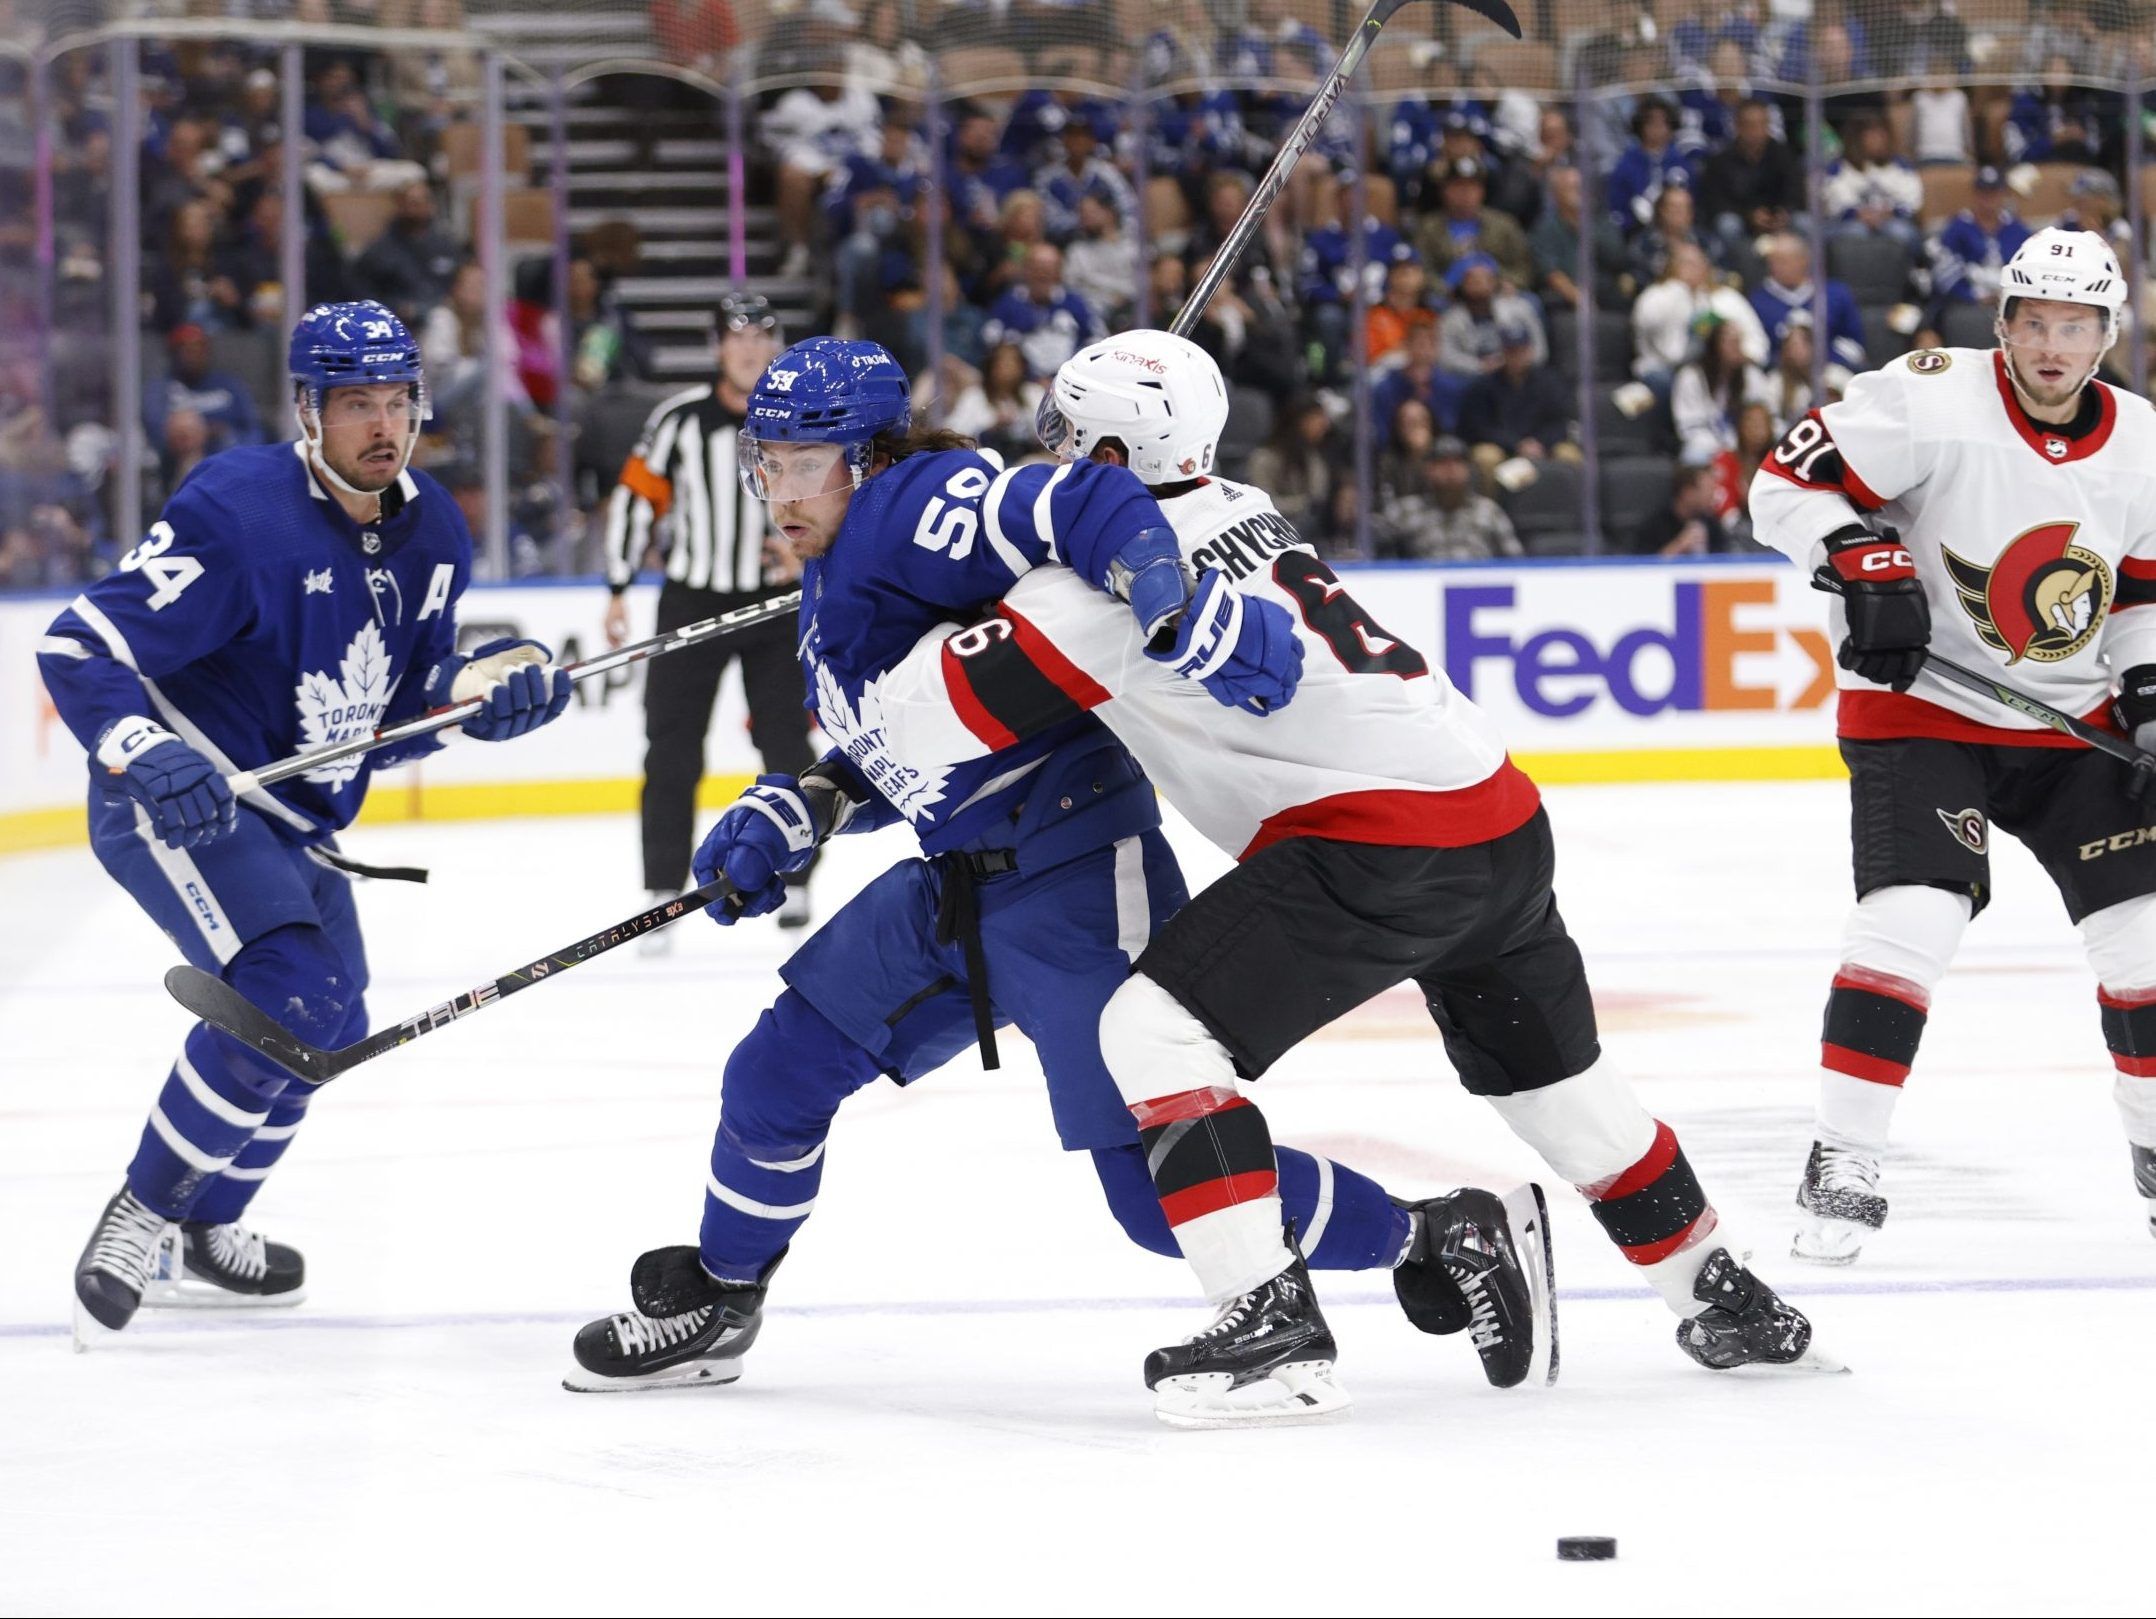 Tyler Bertuzzi - Toronto Maple Leafs Left Wing - ESPN